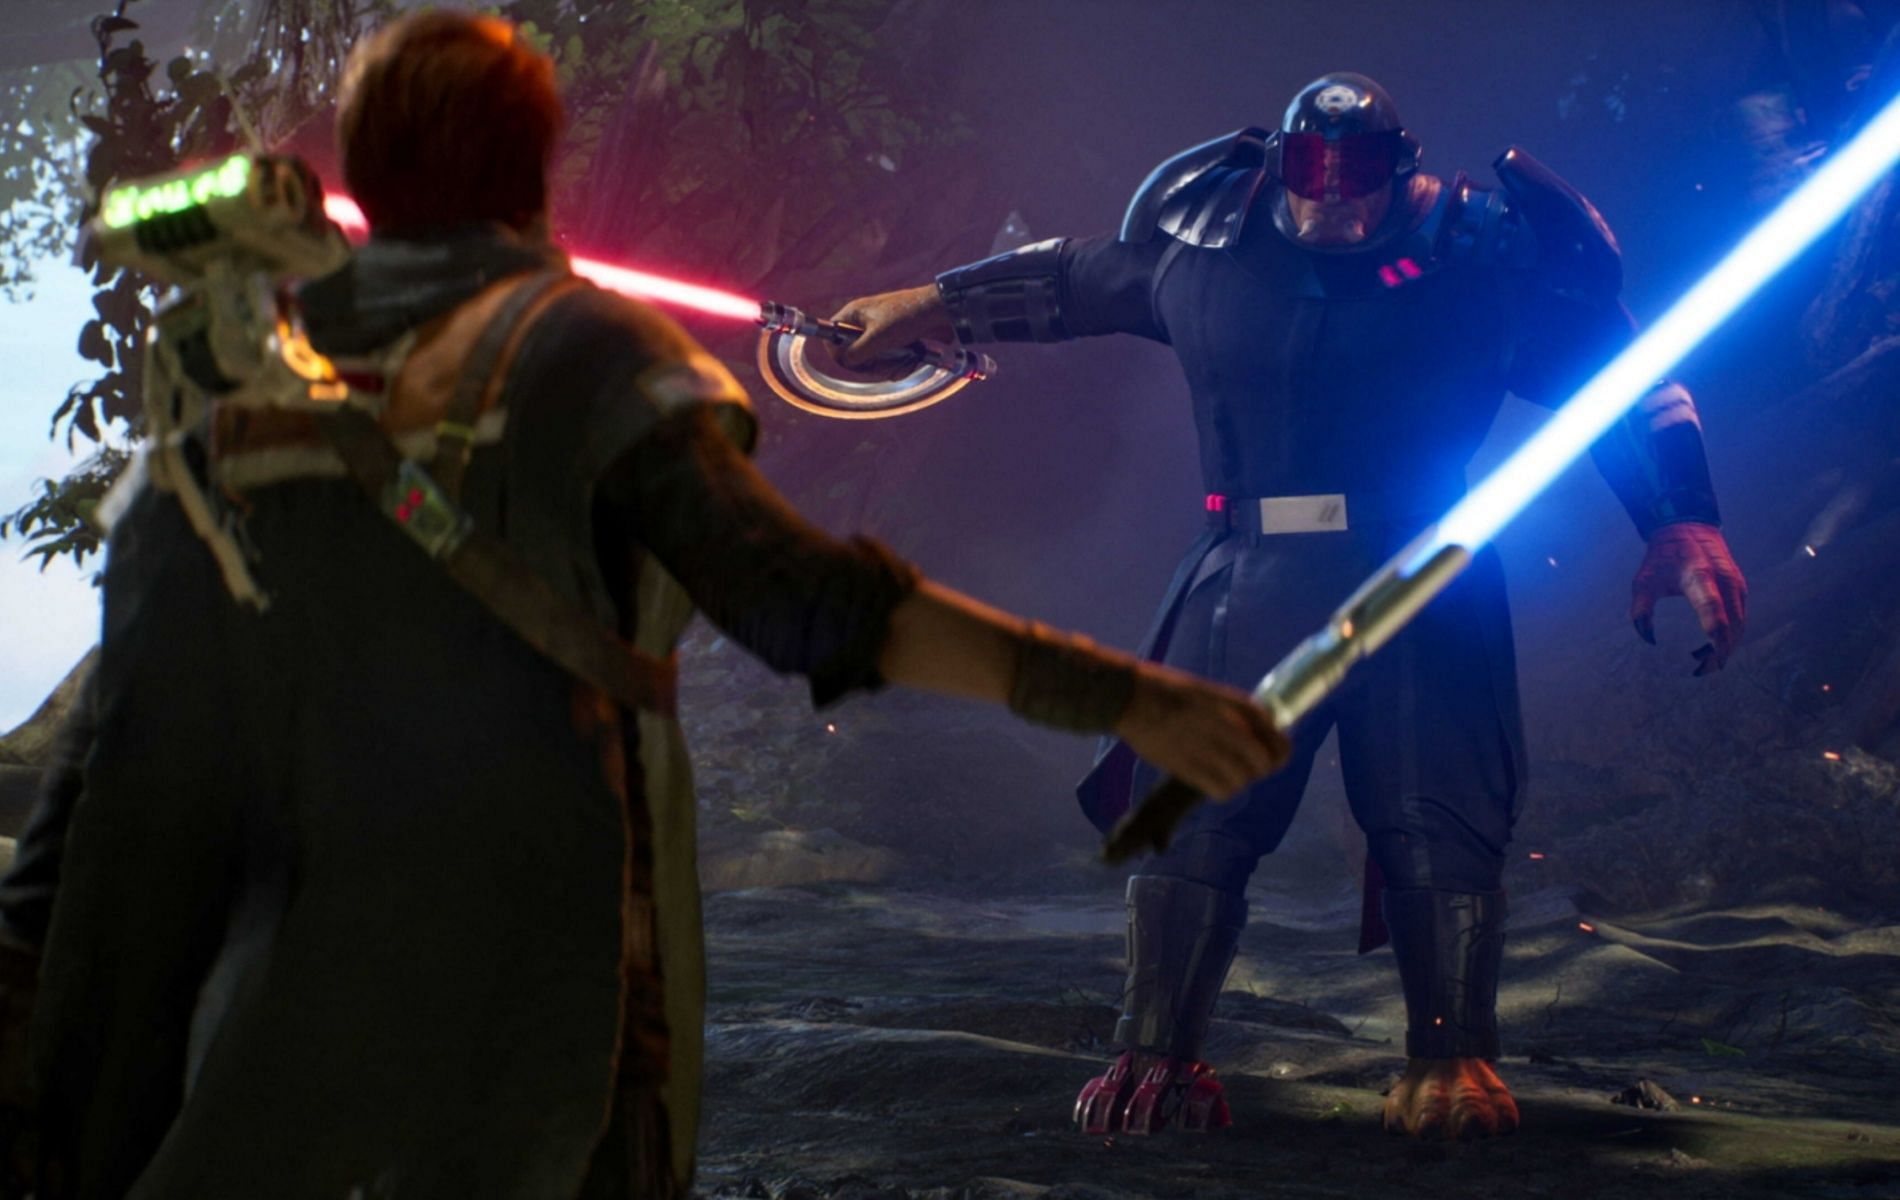 Star Wars Jedi: Fallen Order 2 Receives Disappointing Release Update